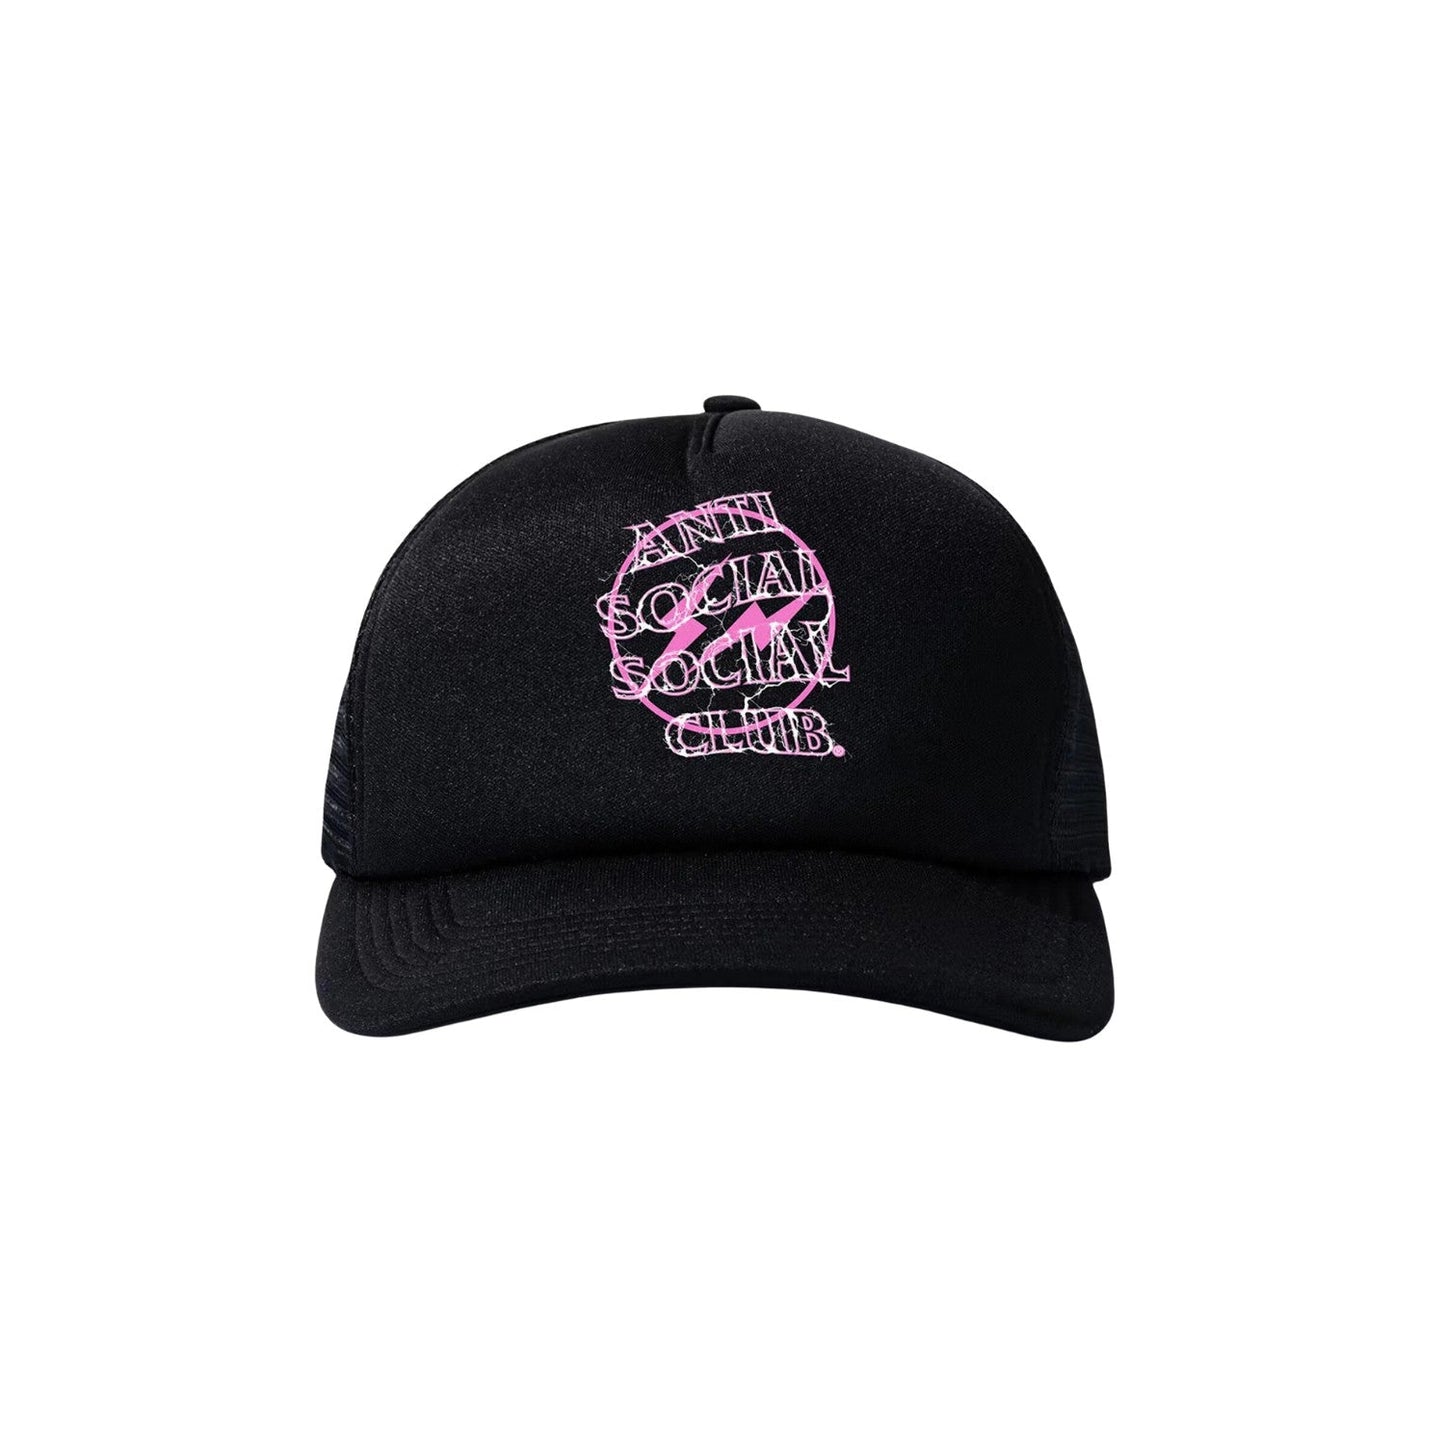 Los Angeles Lakers Patch Snapback Hat X Fragment Design Bolt Hat Unisex Style : Assc-dbh